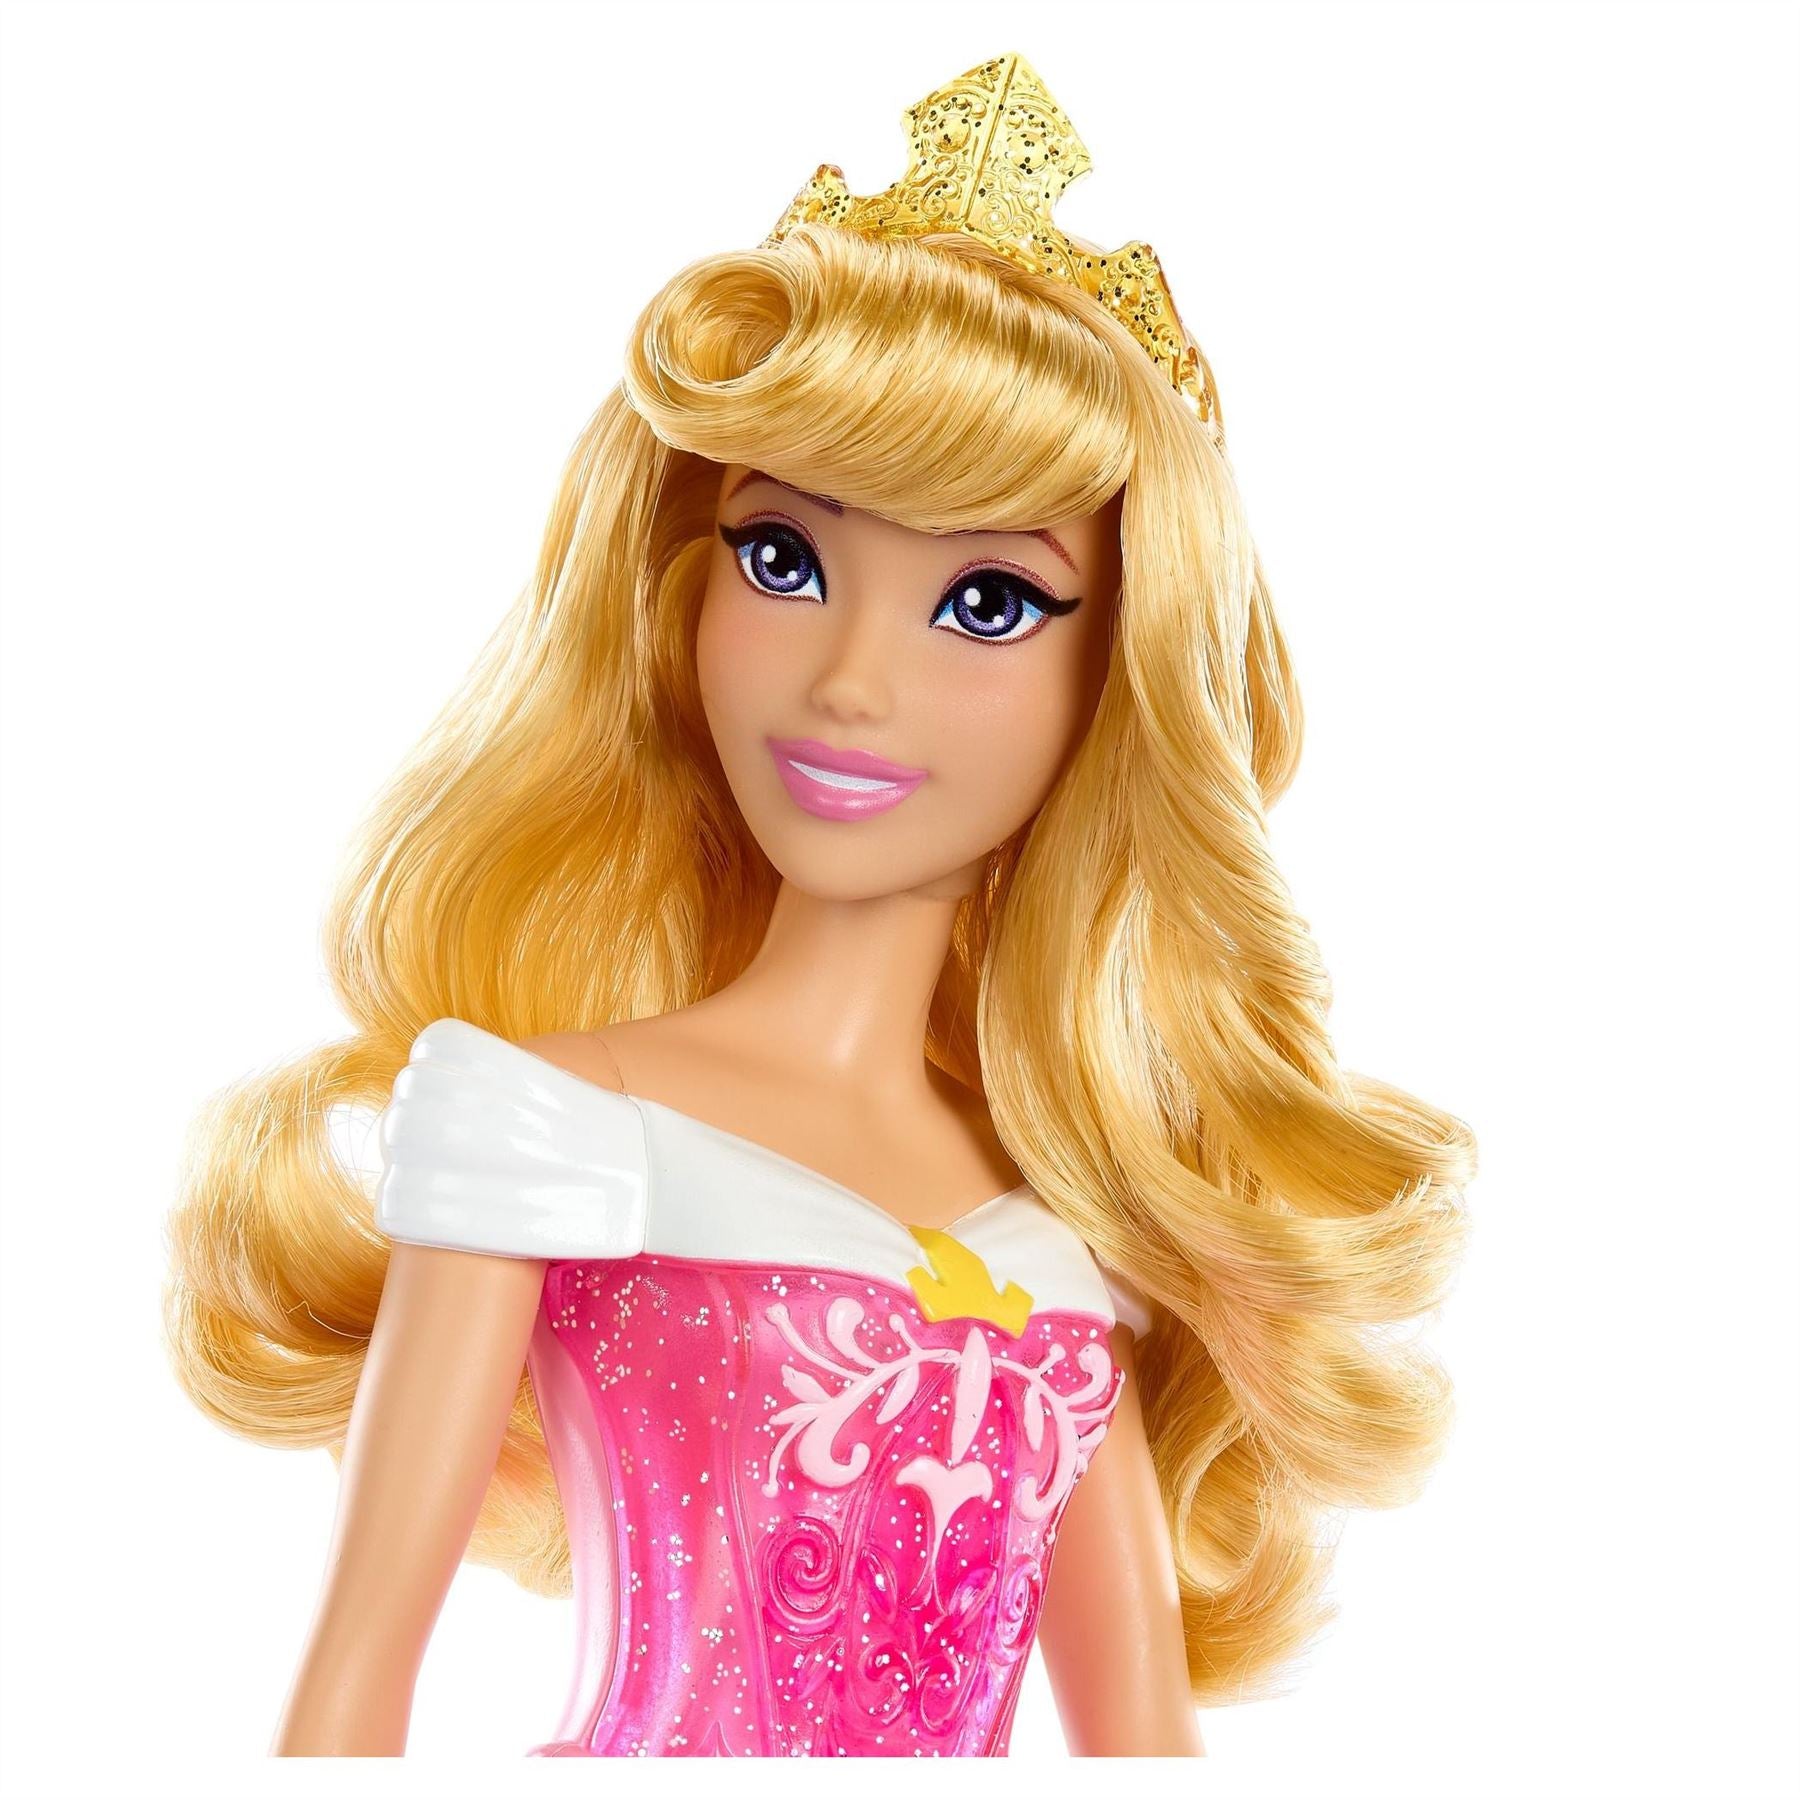 Disney Princess Doll Aurora